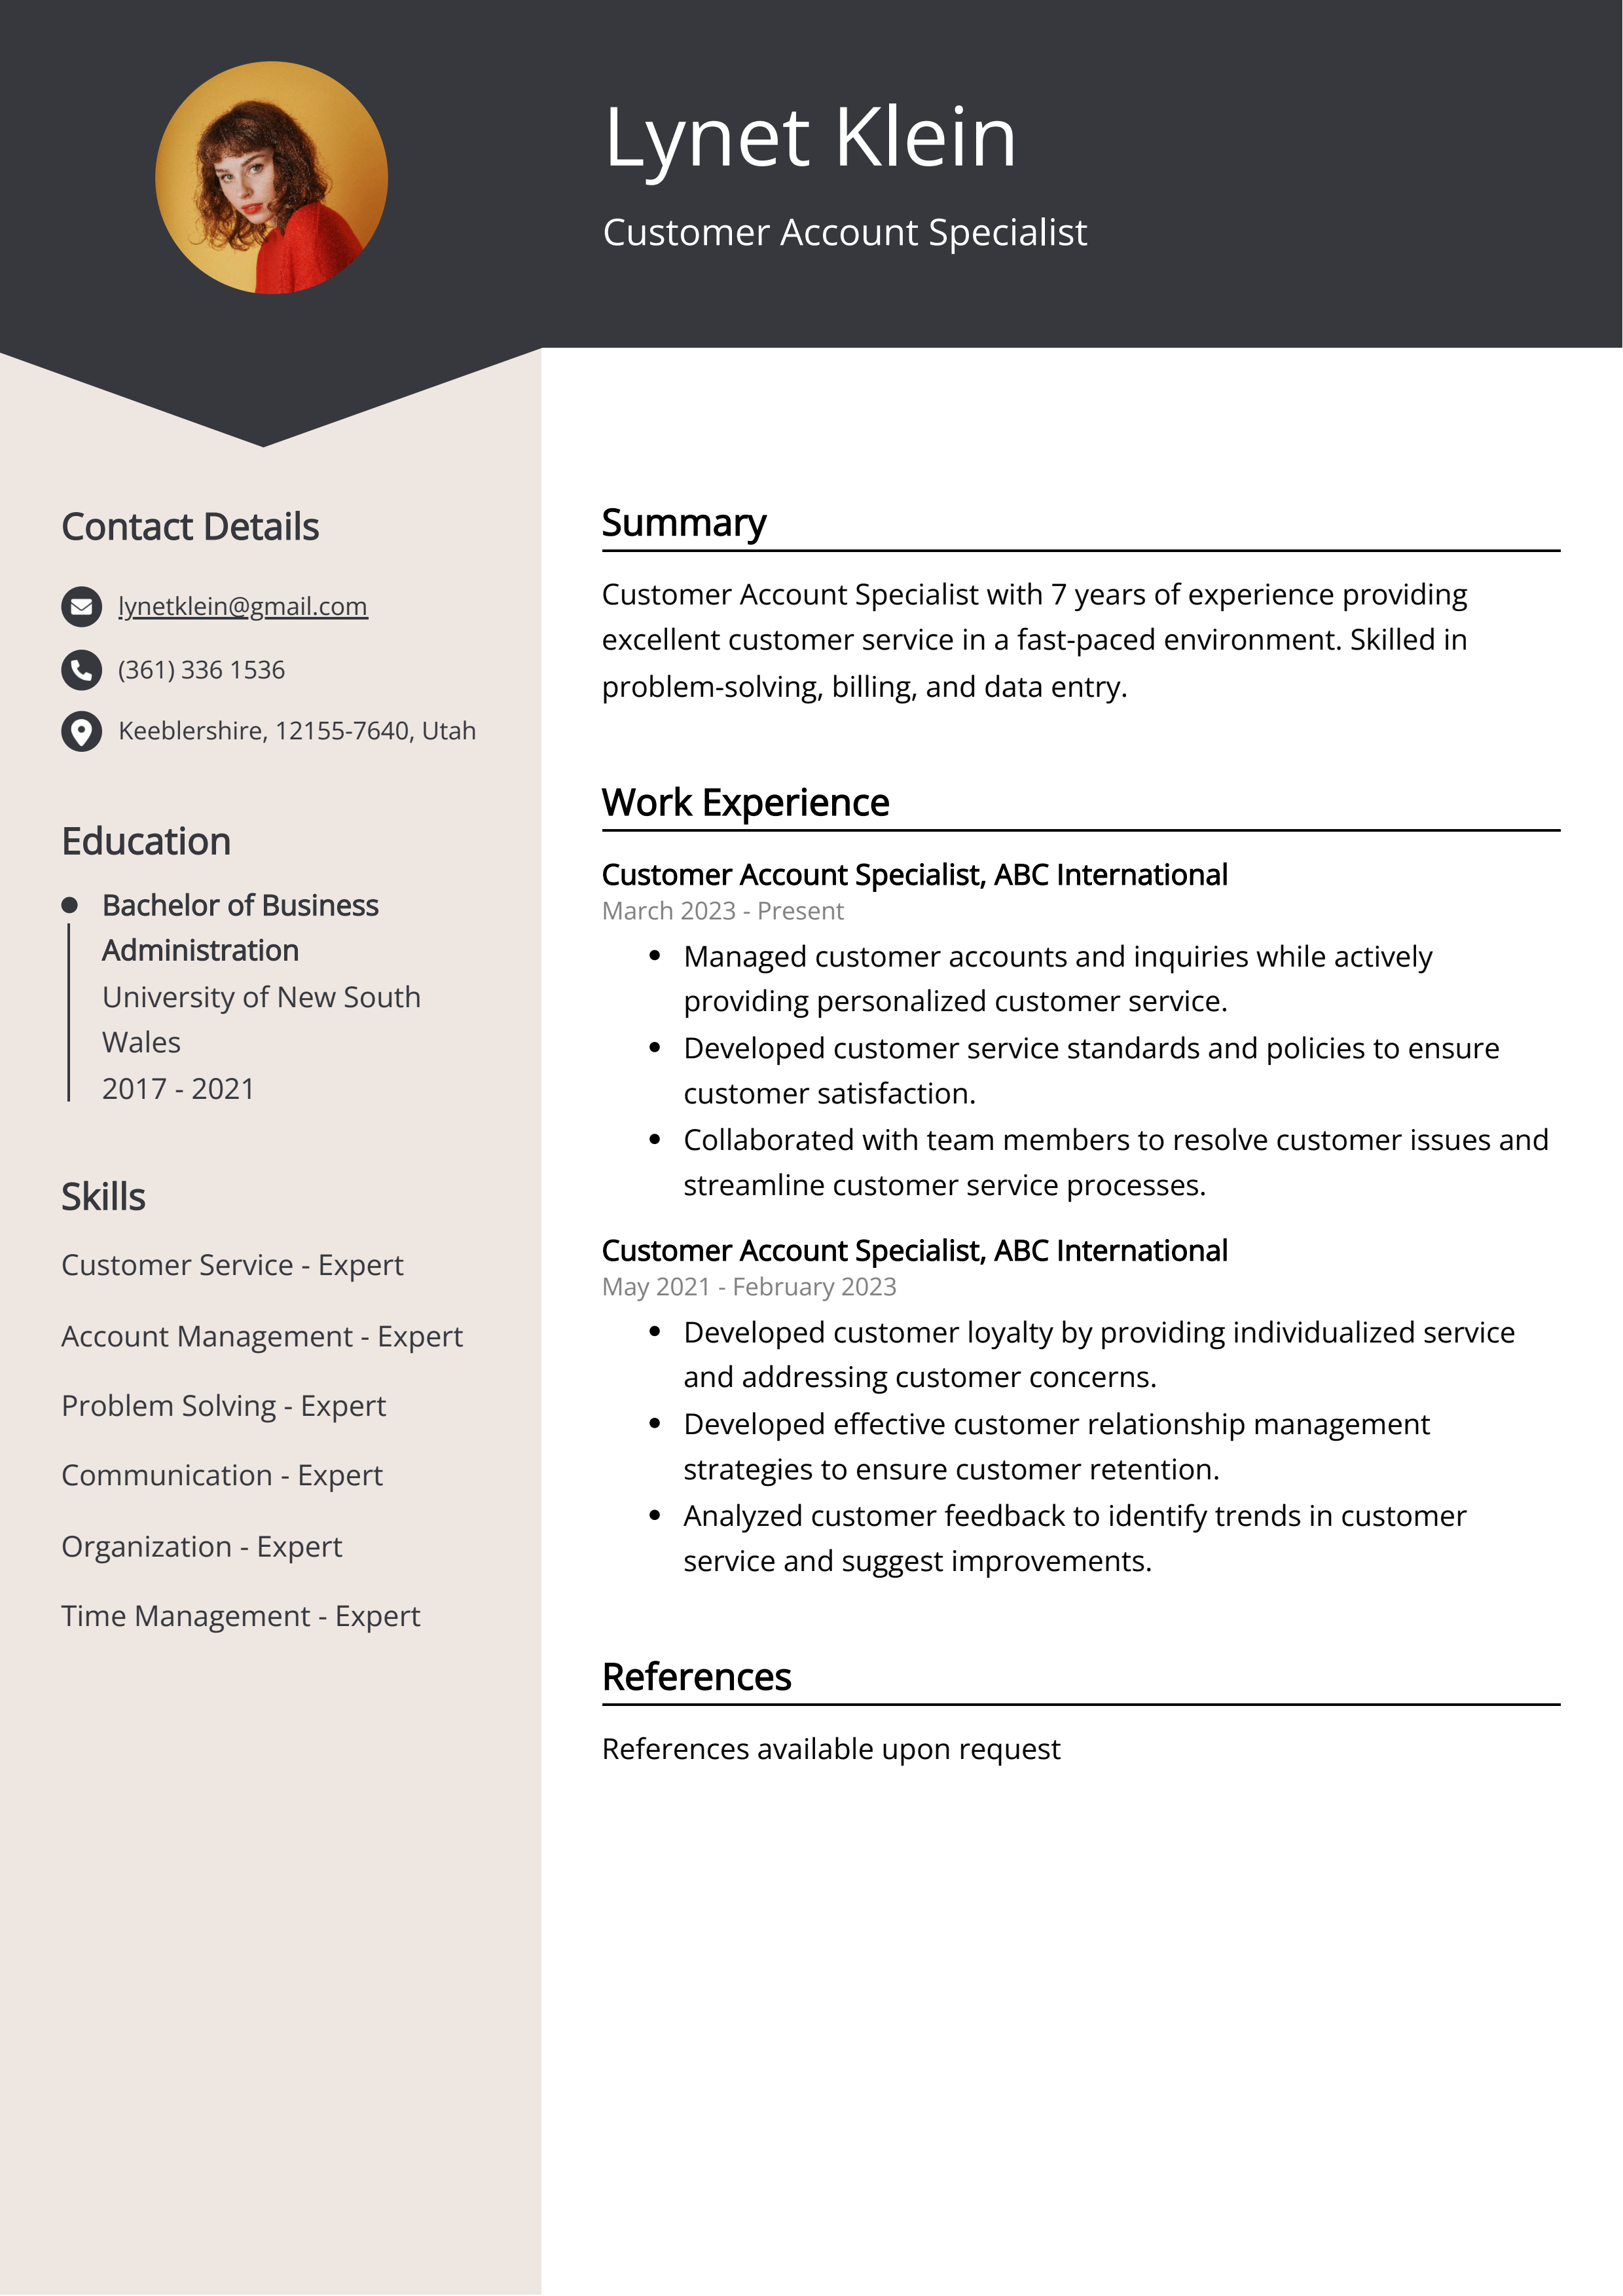 Customer Account Specialist CV Example